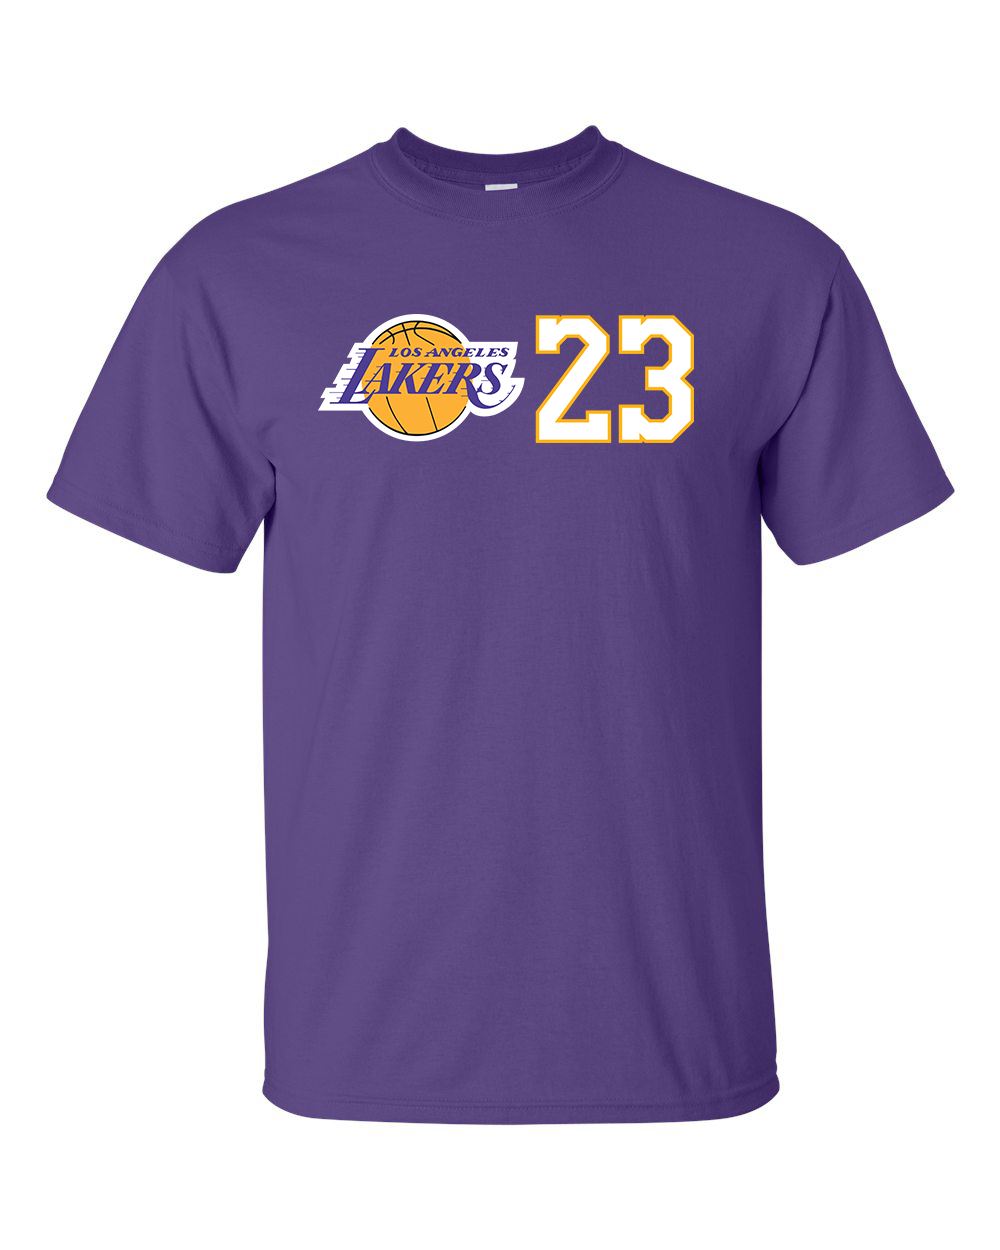 Lebron James Lakers Jersey #23 Purple size L - Brand New